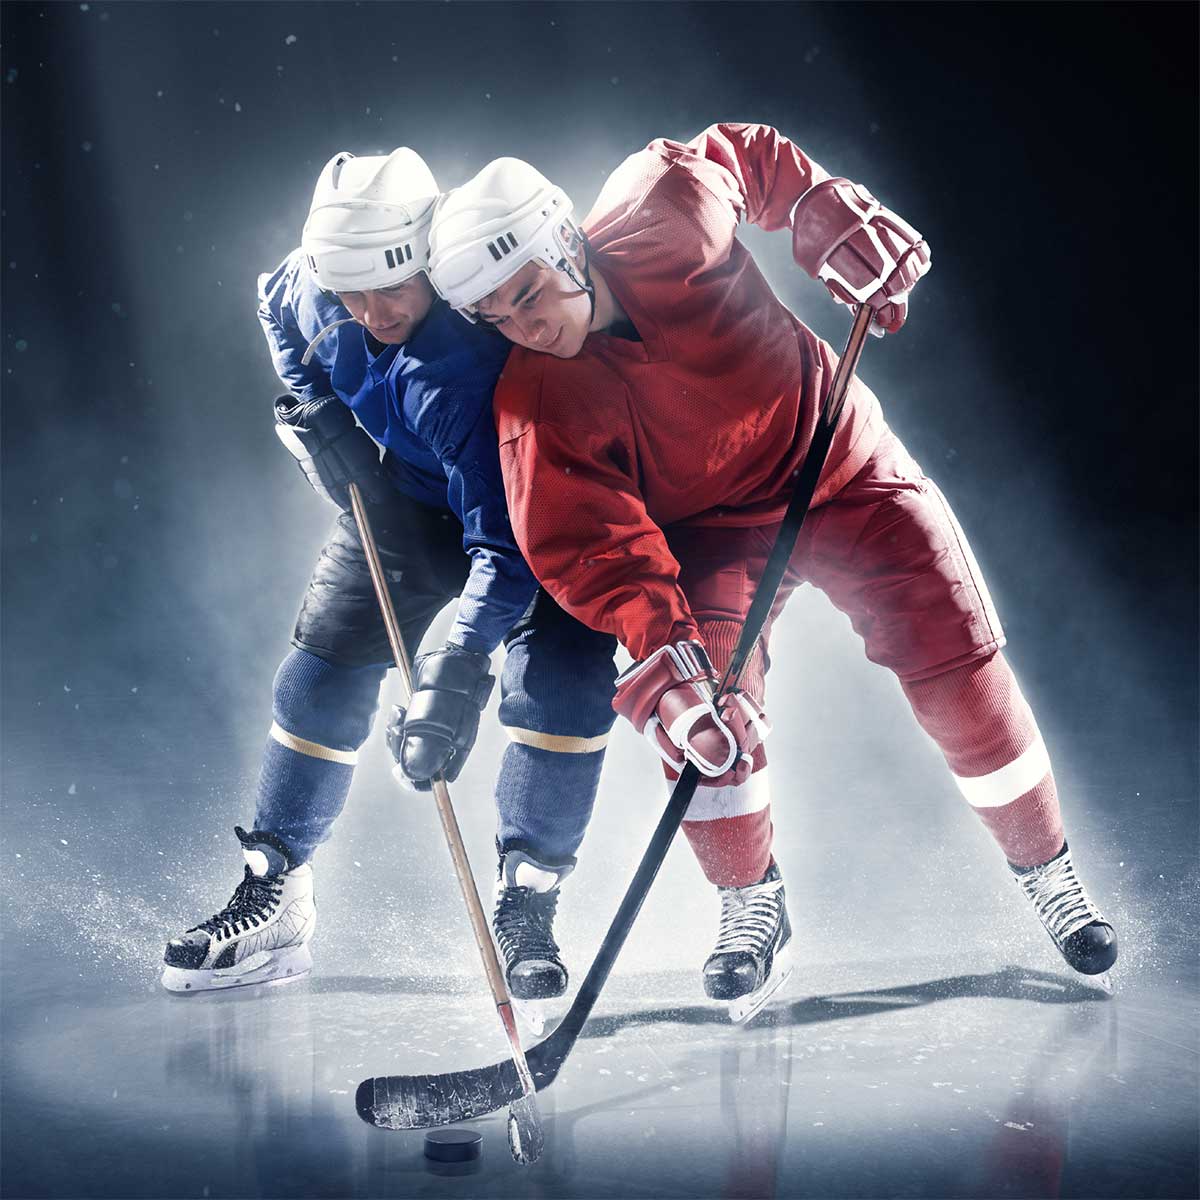 Hockey Jersey Manufacturers in Croatia